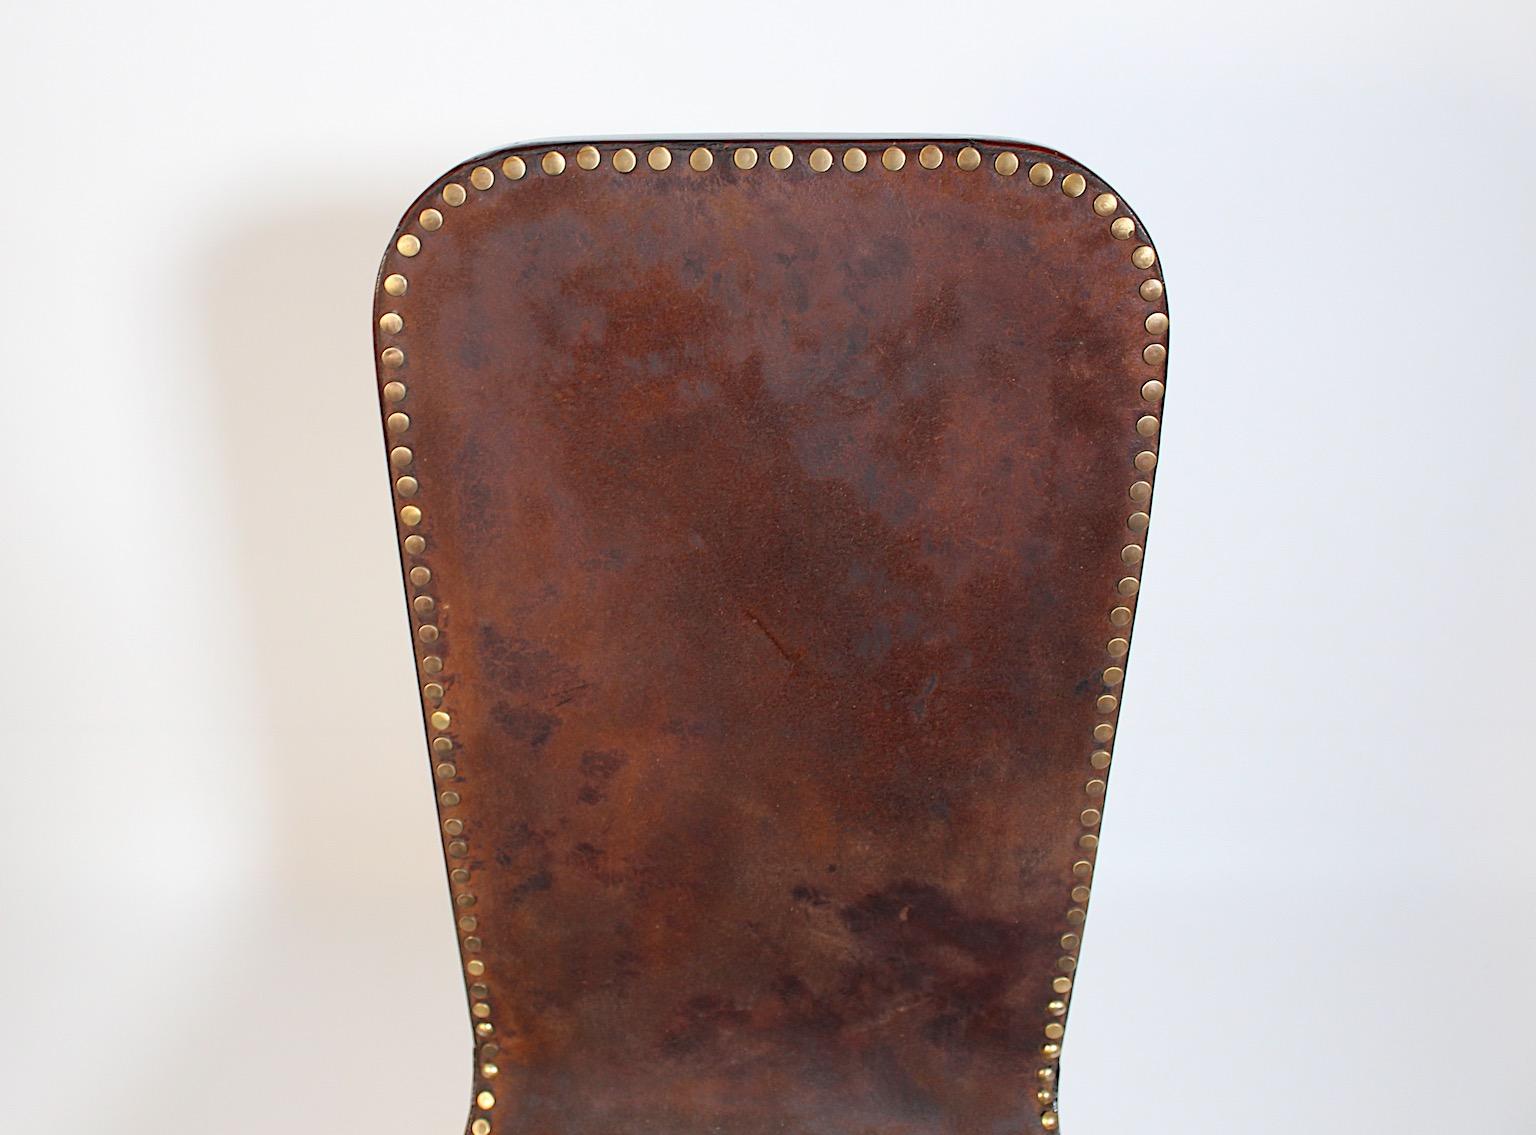 Jugendstil Side Chair Beech Leather by Joseph Urban Gebrüder Thonet 1903 Vienna For Sale 9